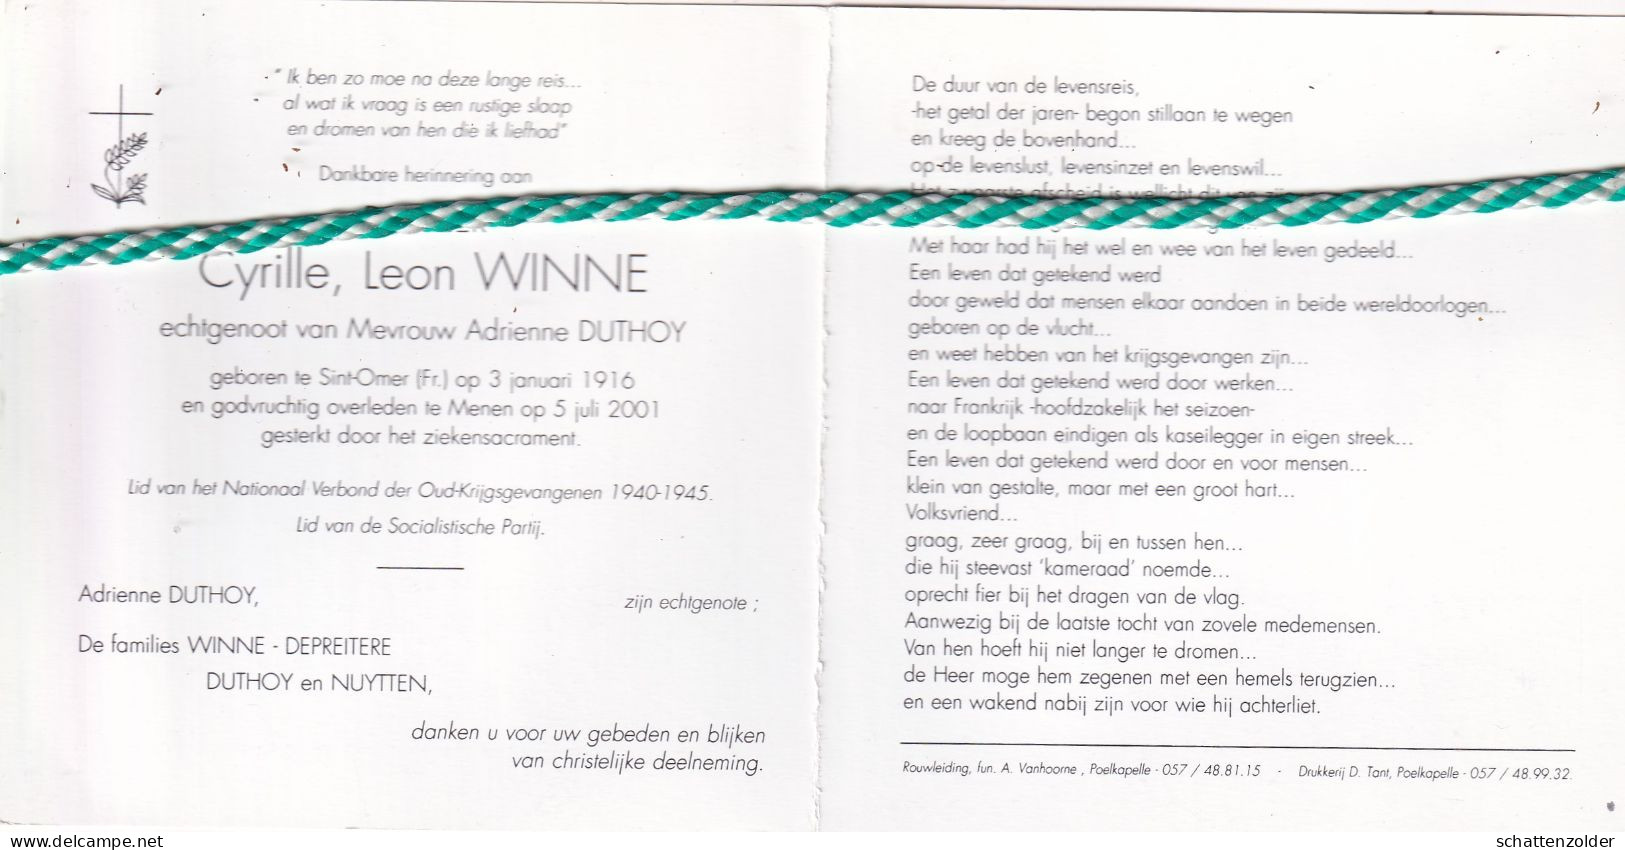 Cyrille Leon Winne-Duthoy, Sint-Omer (Fr) 1916, Menen 2001. Foto - Décès